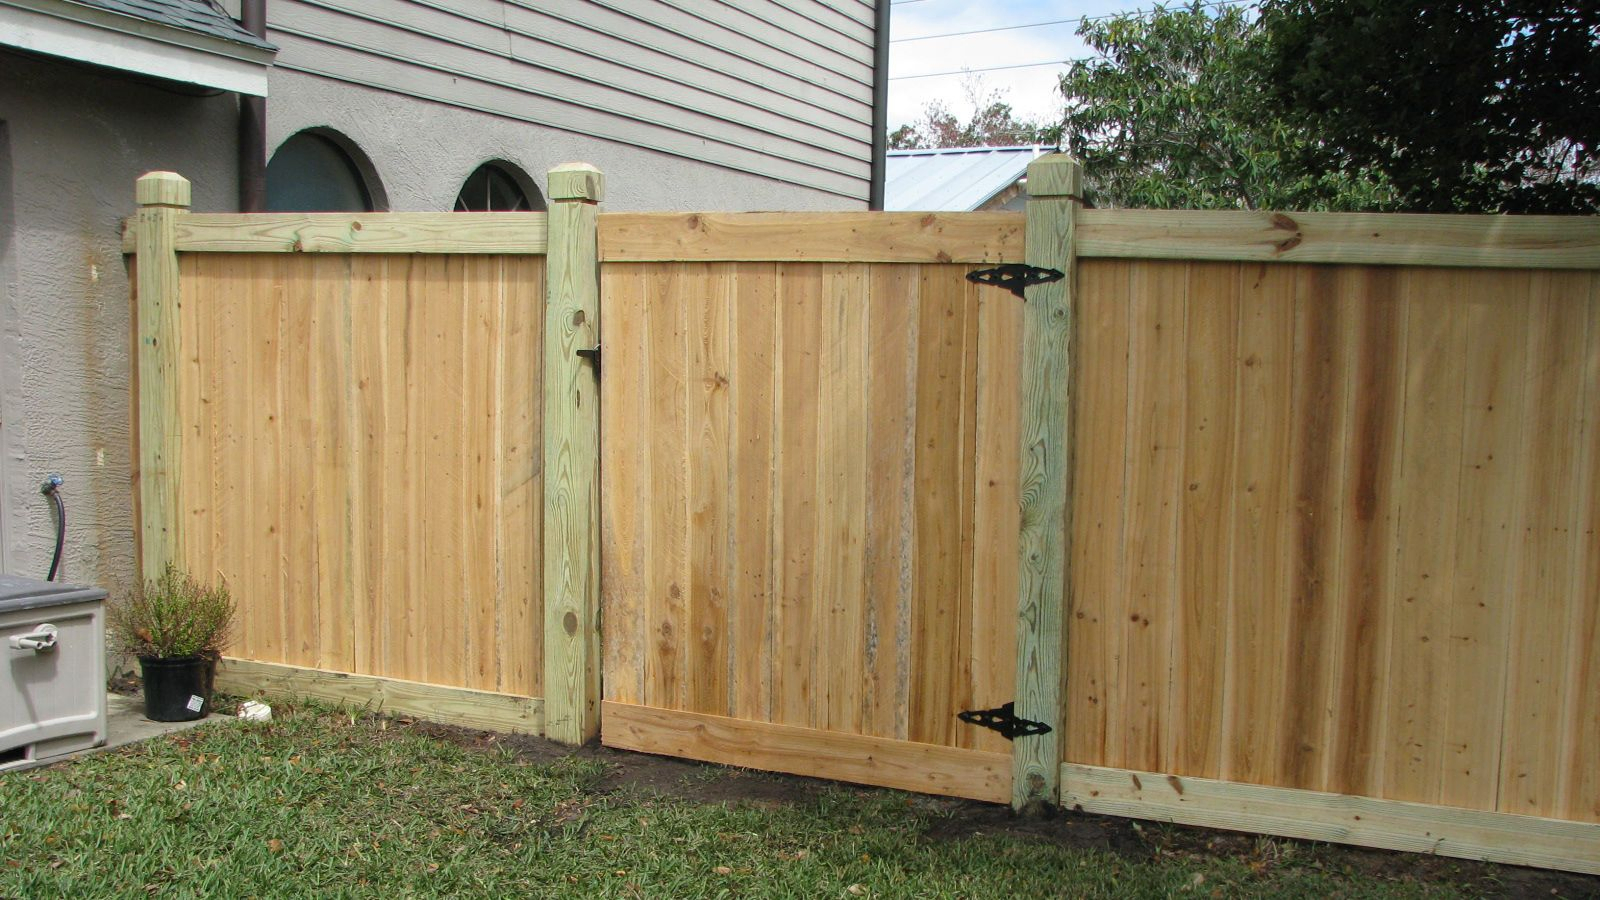 13.SIMPHOME.COM mossy oak fence wood fence designs wood privacy fence wood